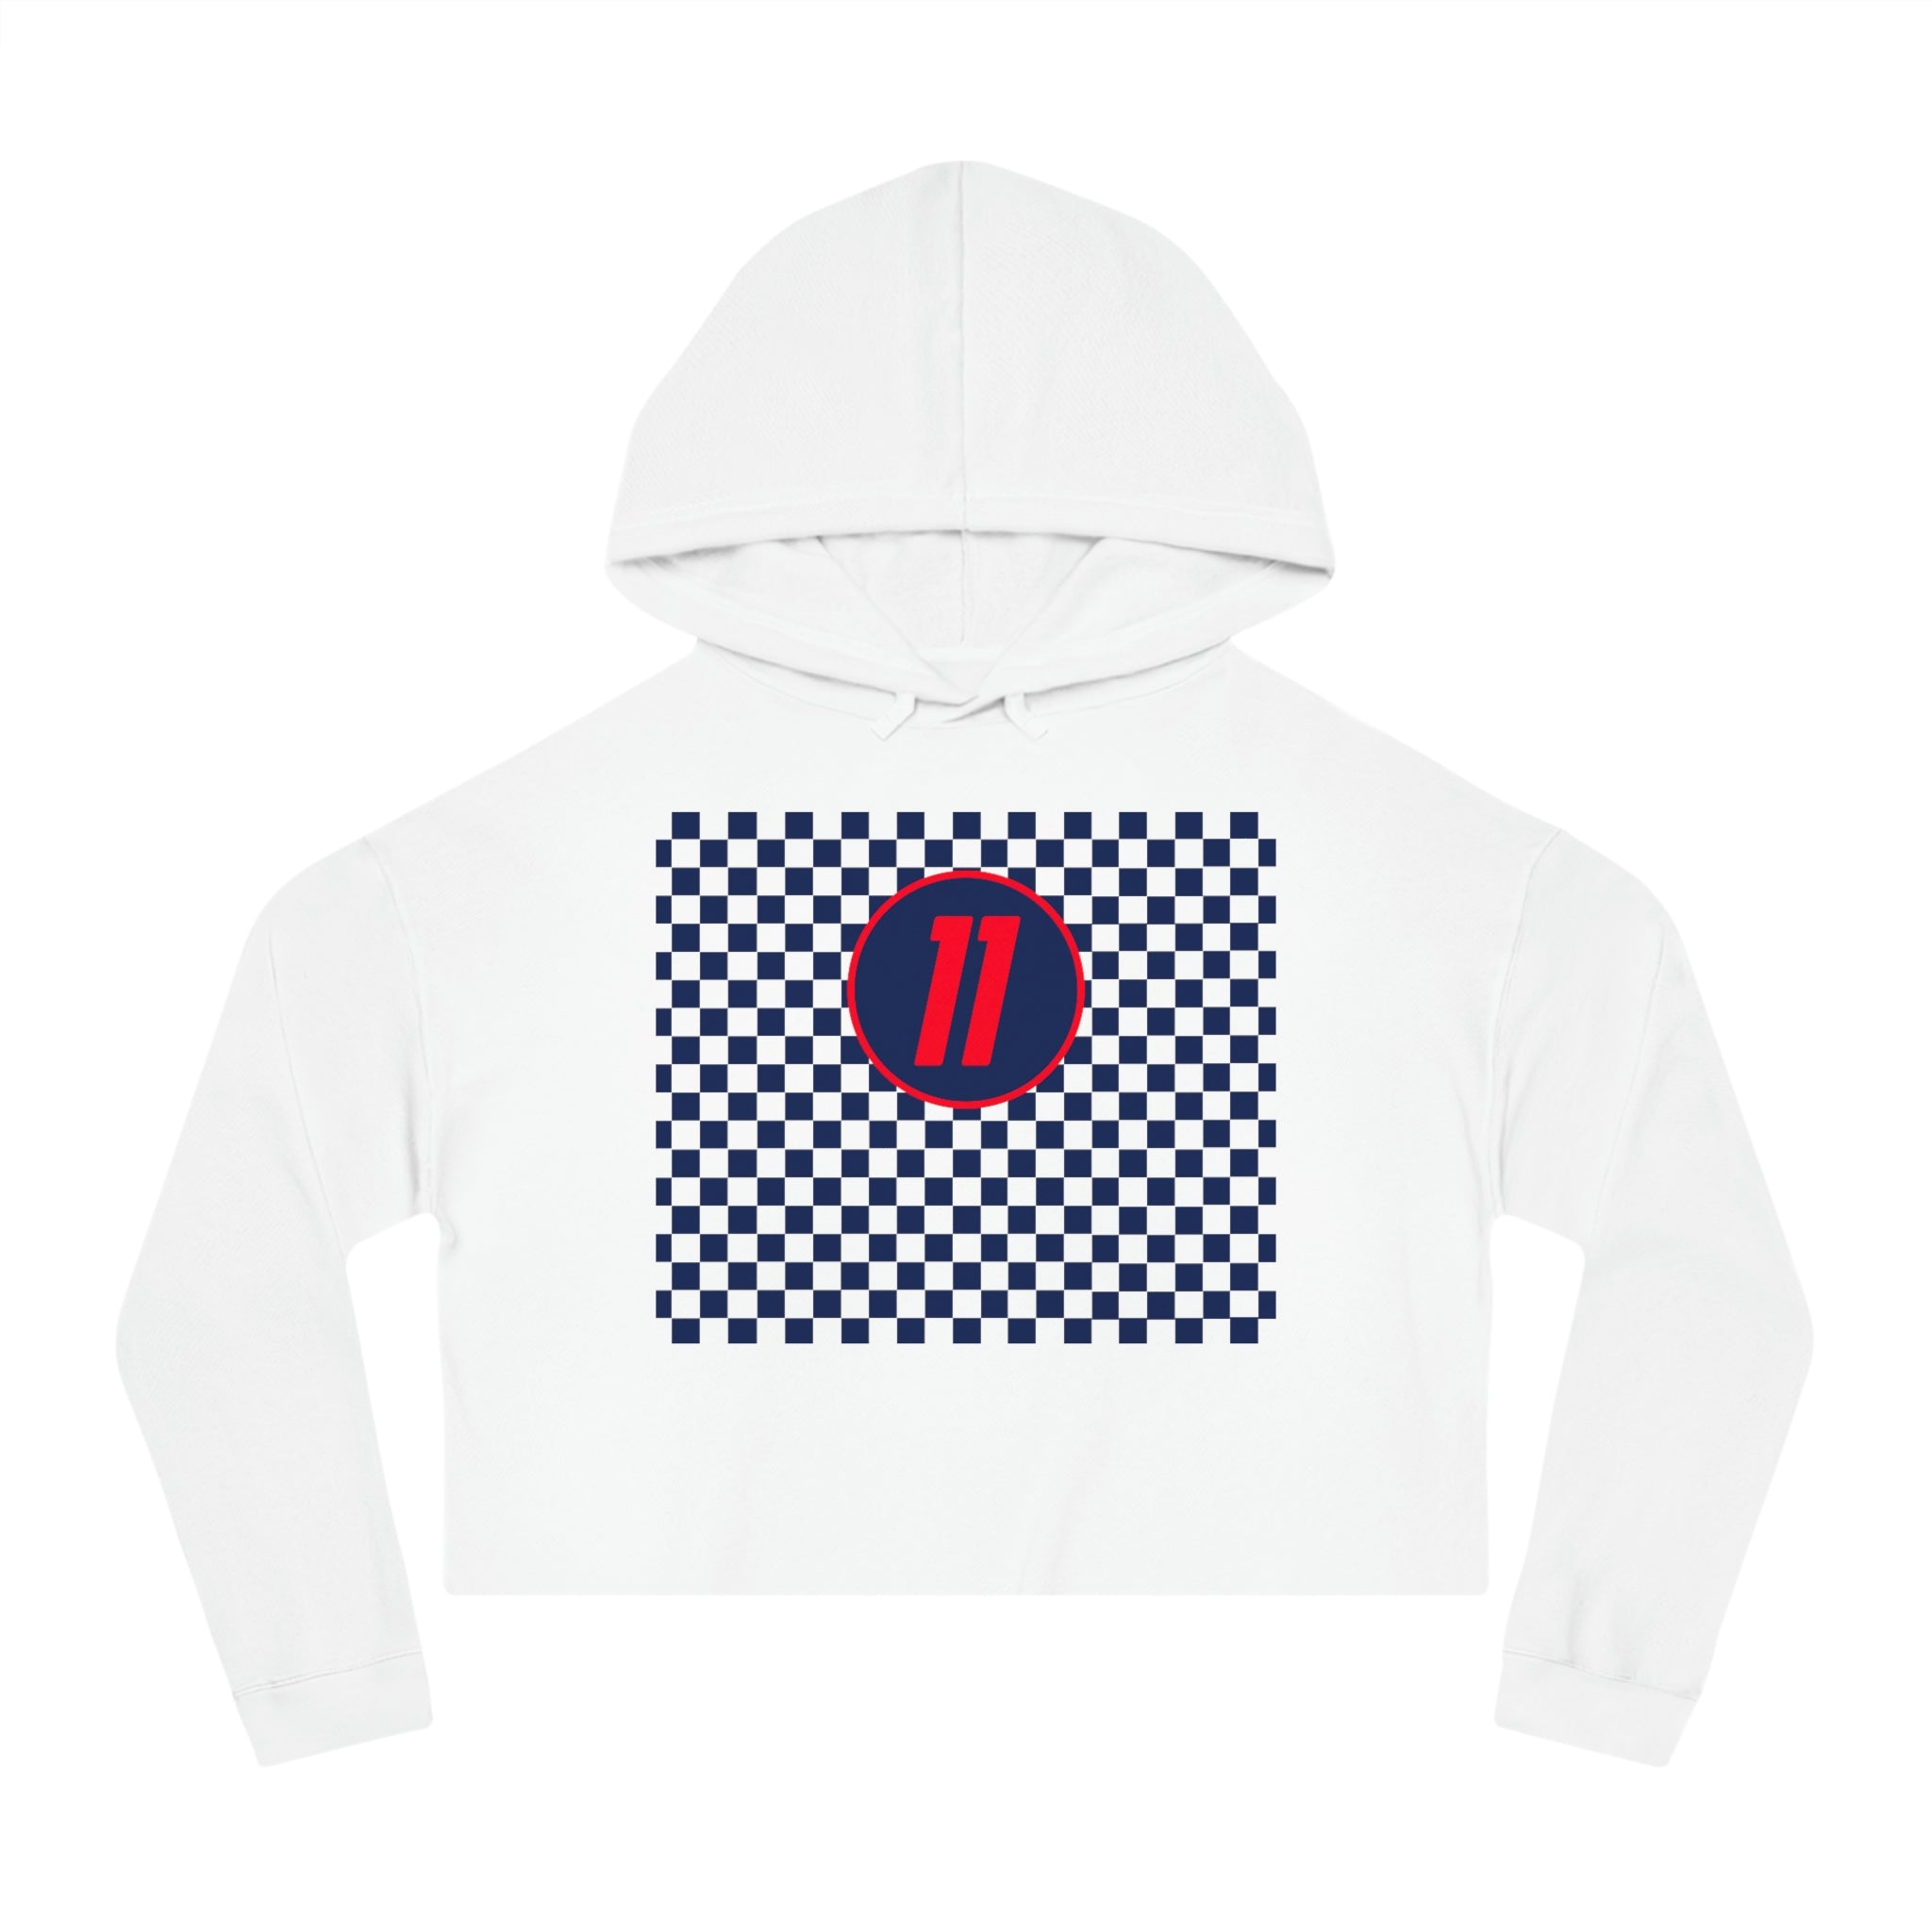 Checkered "11" Women’s Cropped Hooded Sweatshirt - FormulaFanatics